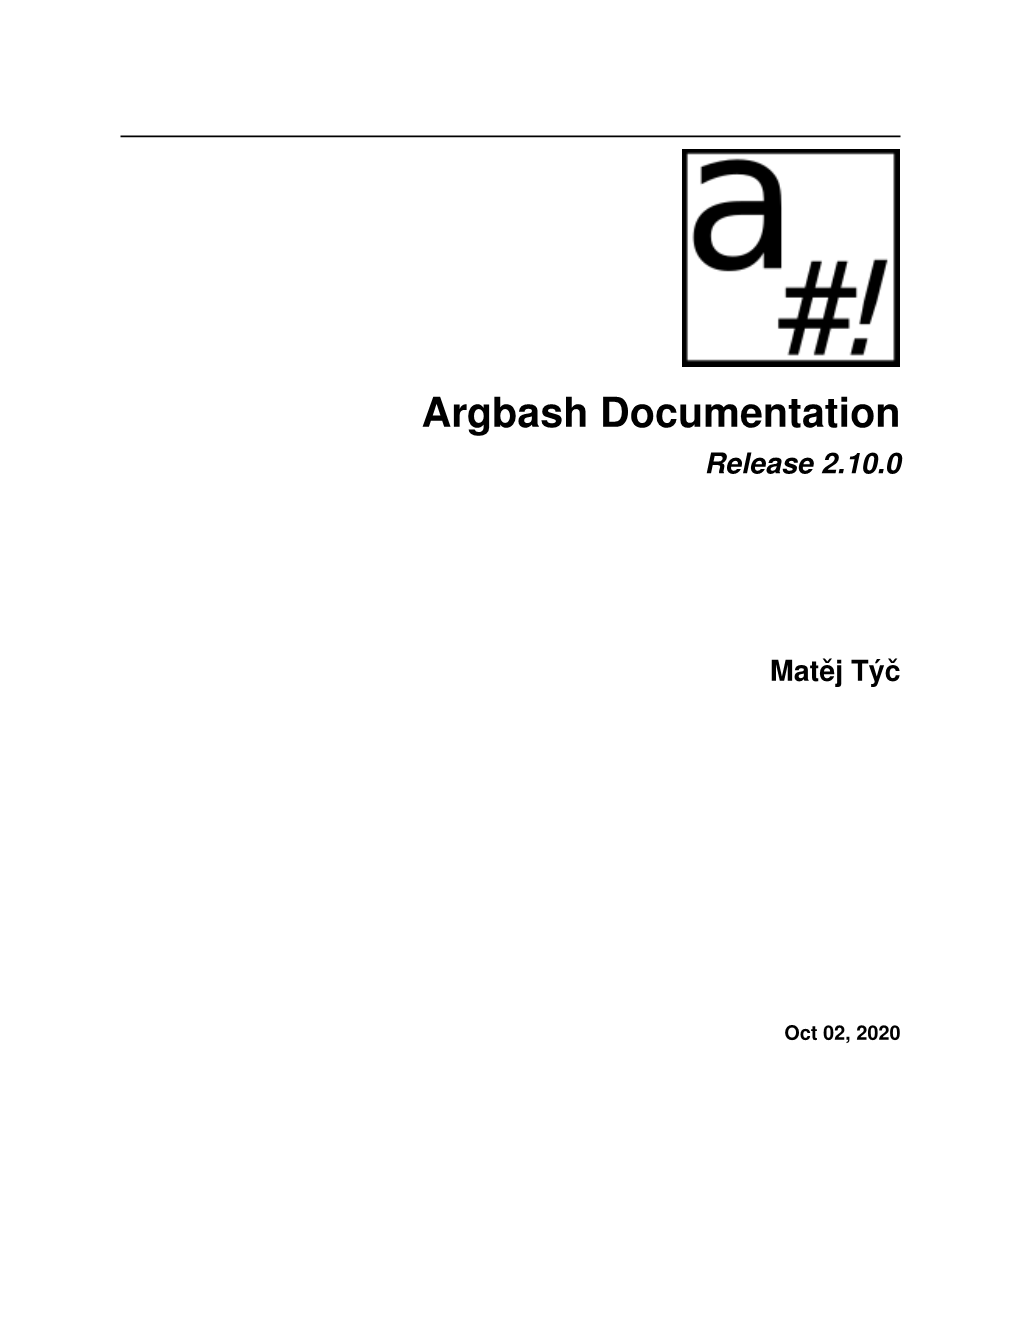 Argbash Documentation Release 2.10.0